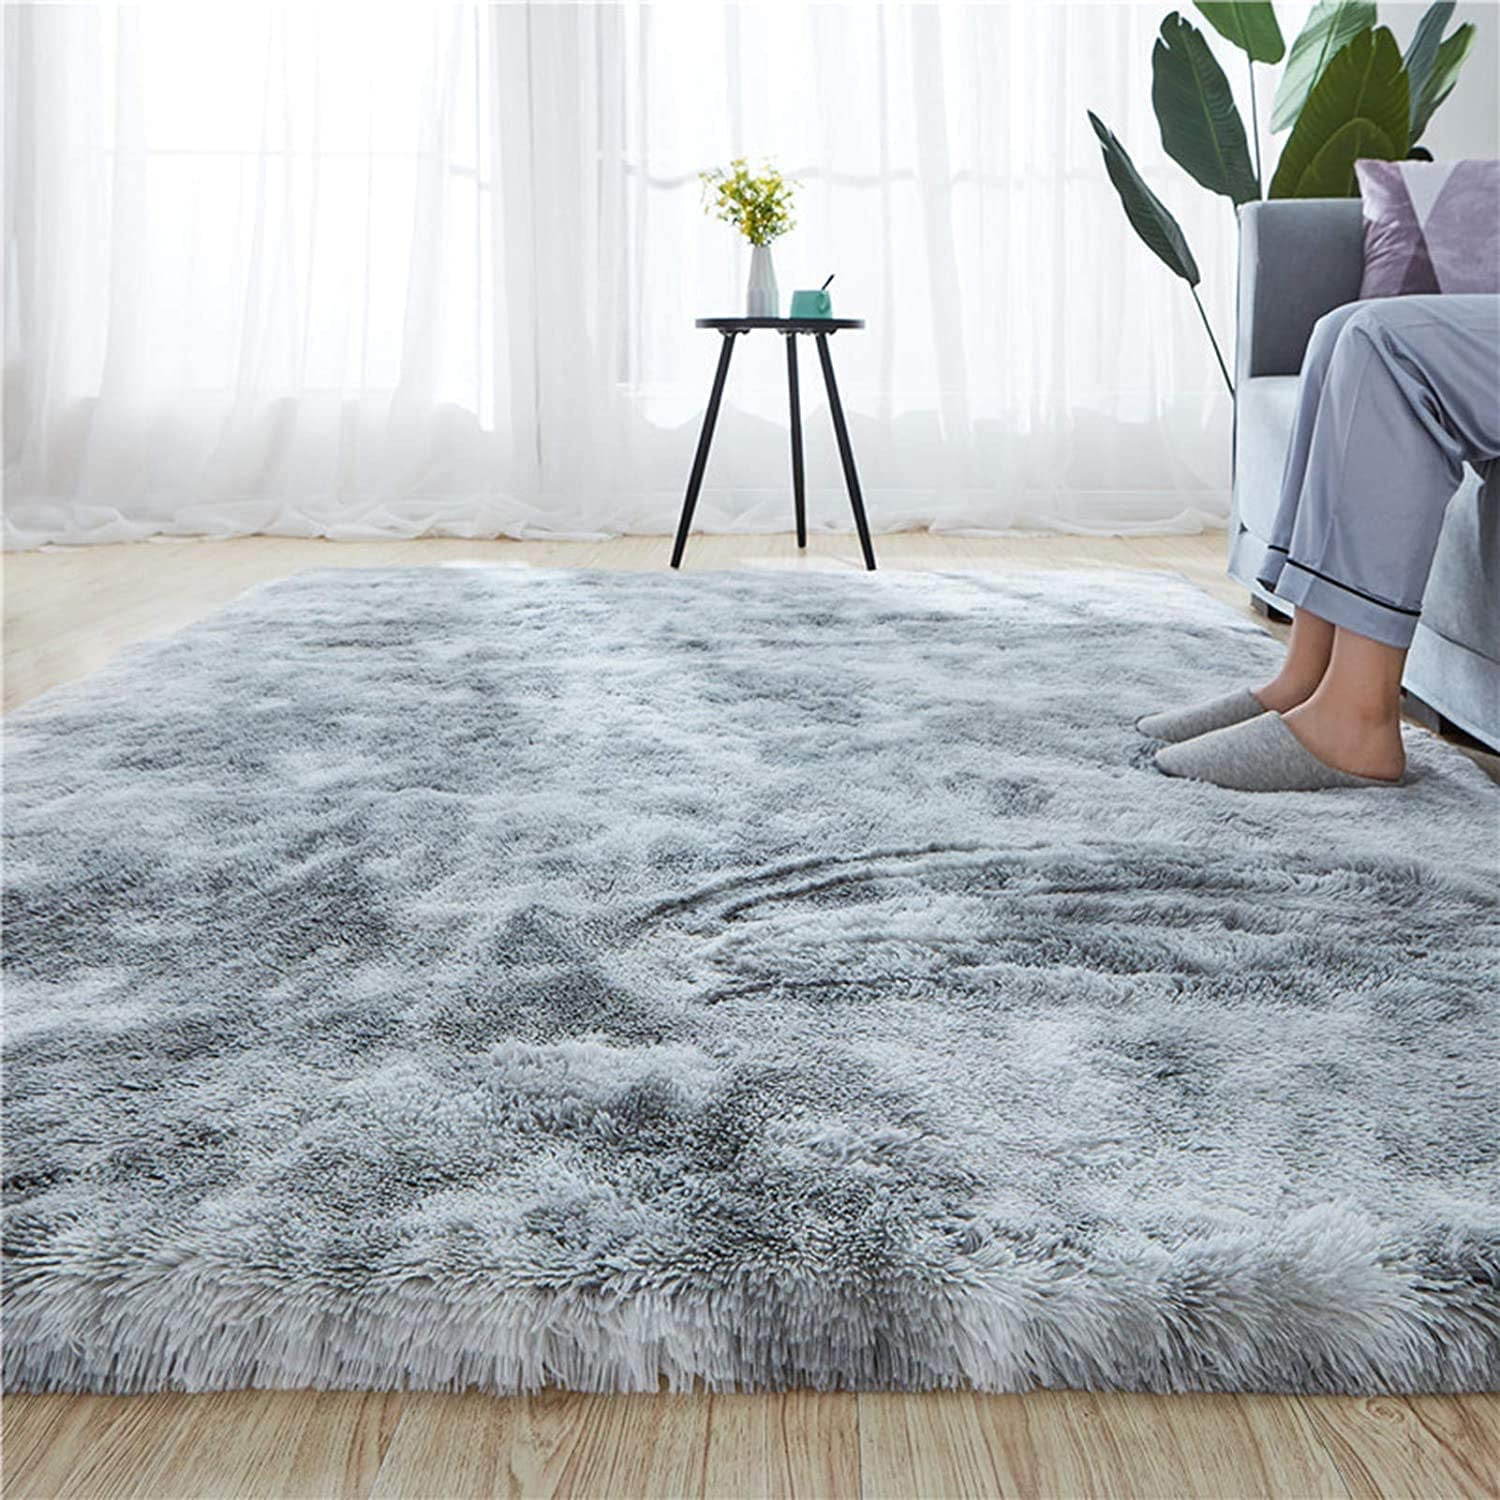 Small Plush Floor Carpet Soft Fluffy Area Rug Mat Shaggy for Bedroom Living Room 